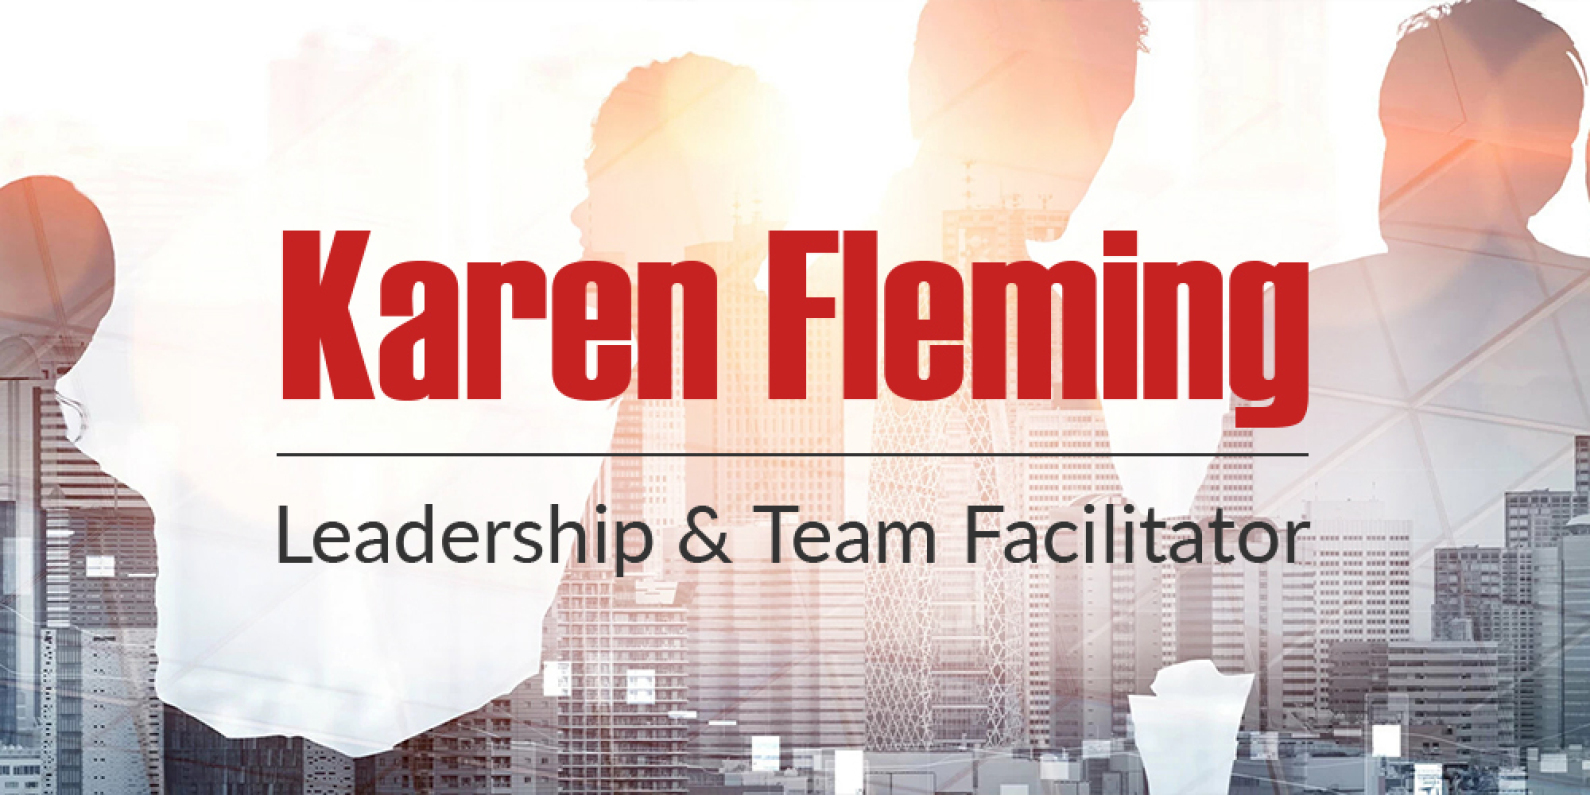 Karen Fleming - Leadership & Teams Coach